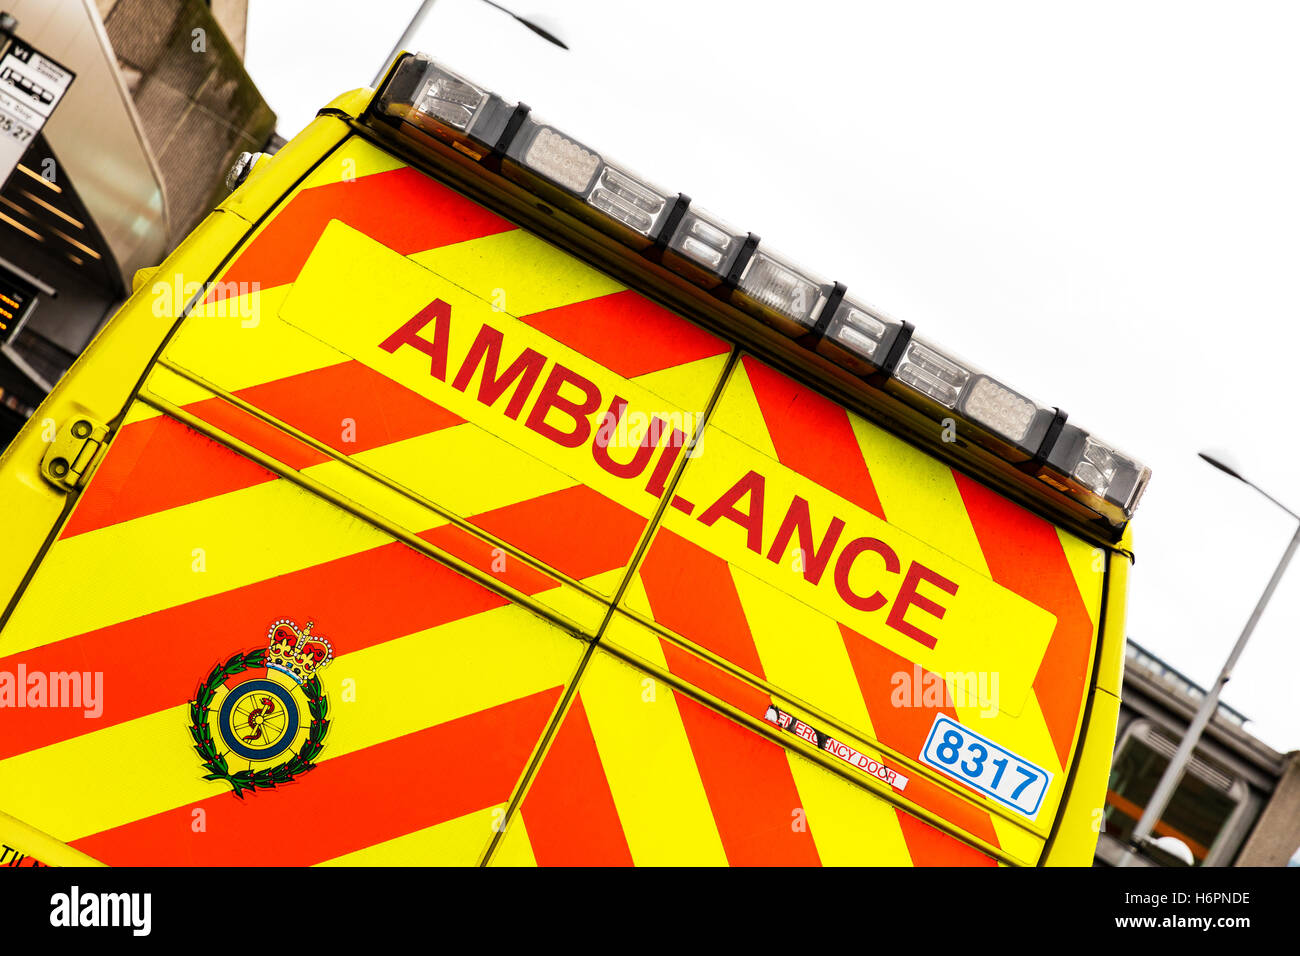 Ambulance van vehicle rear back doors vehicles sign name word vans Stock  Photo - Alamy